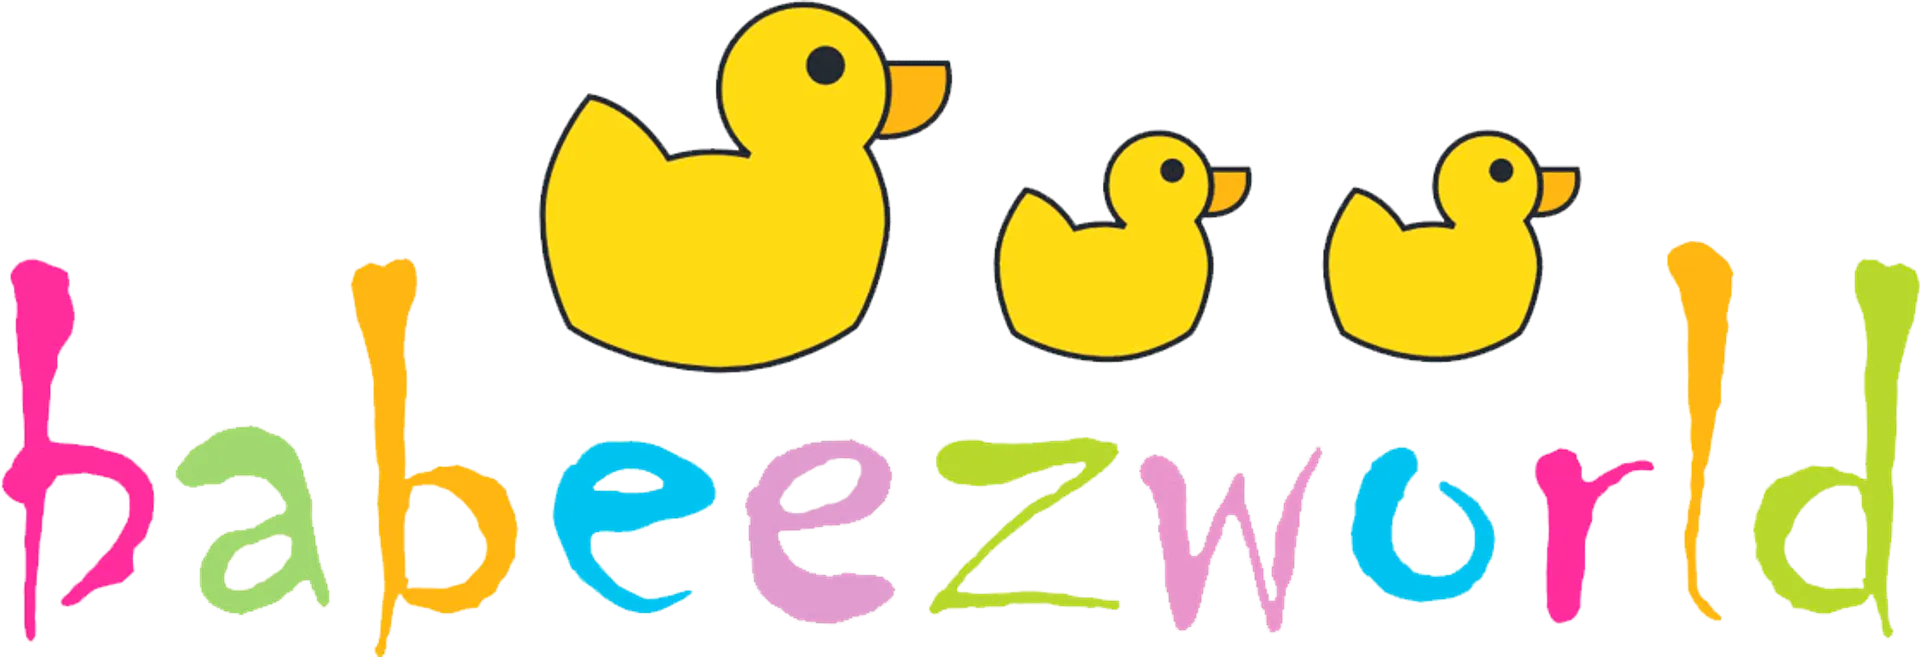 BABEEZ WORLD logo. Current catalogue